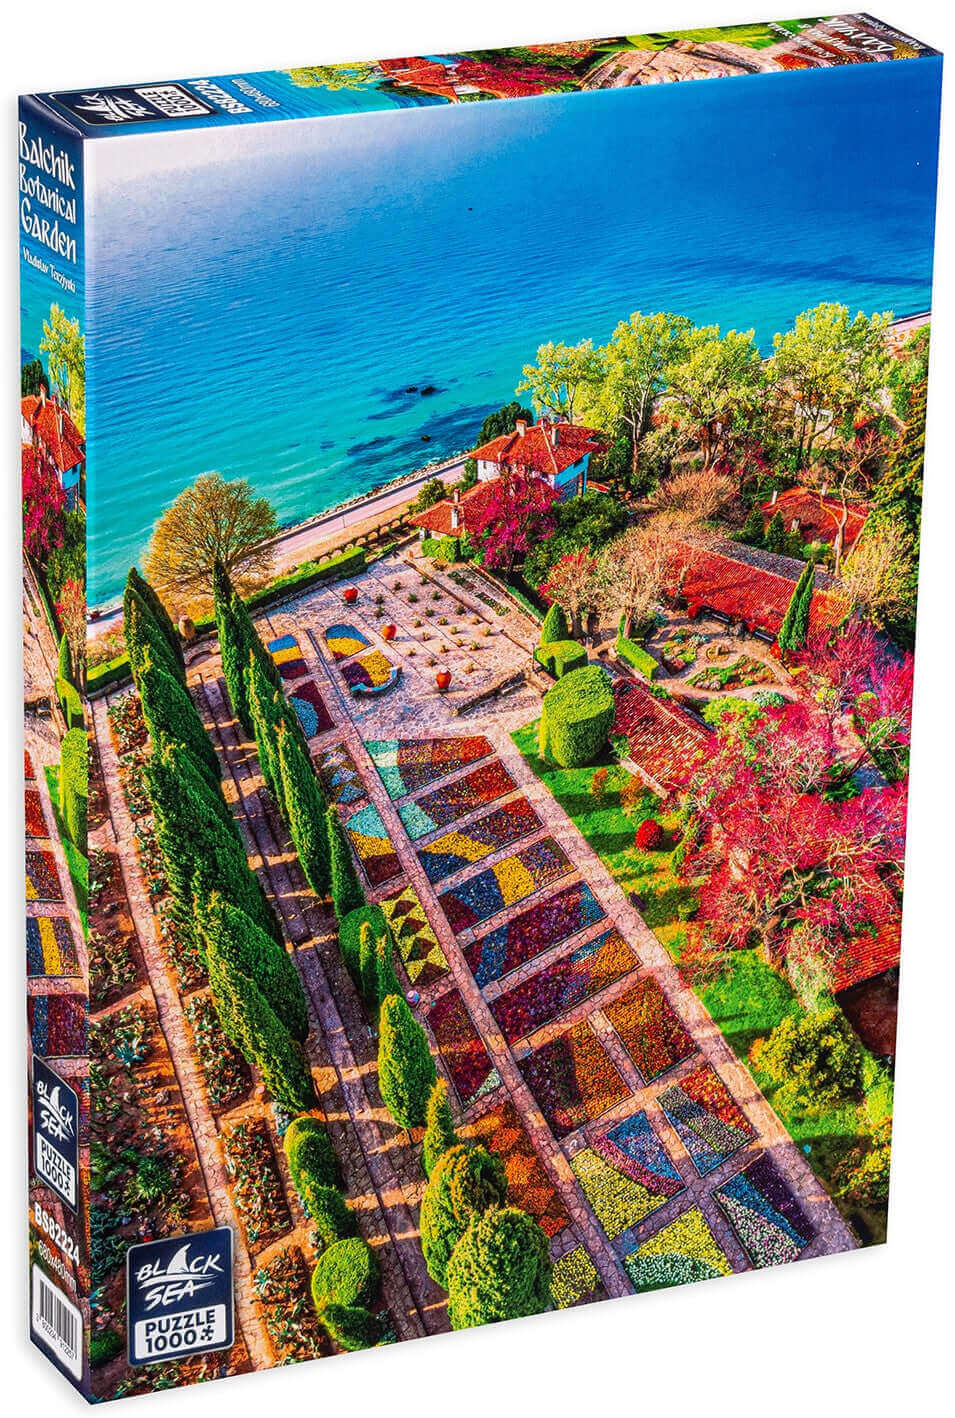 Puzzle Black Sea 1000 pieces - Balchik Botanical Garden, -